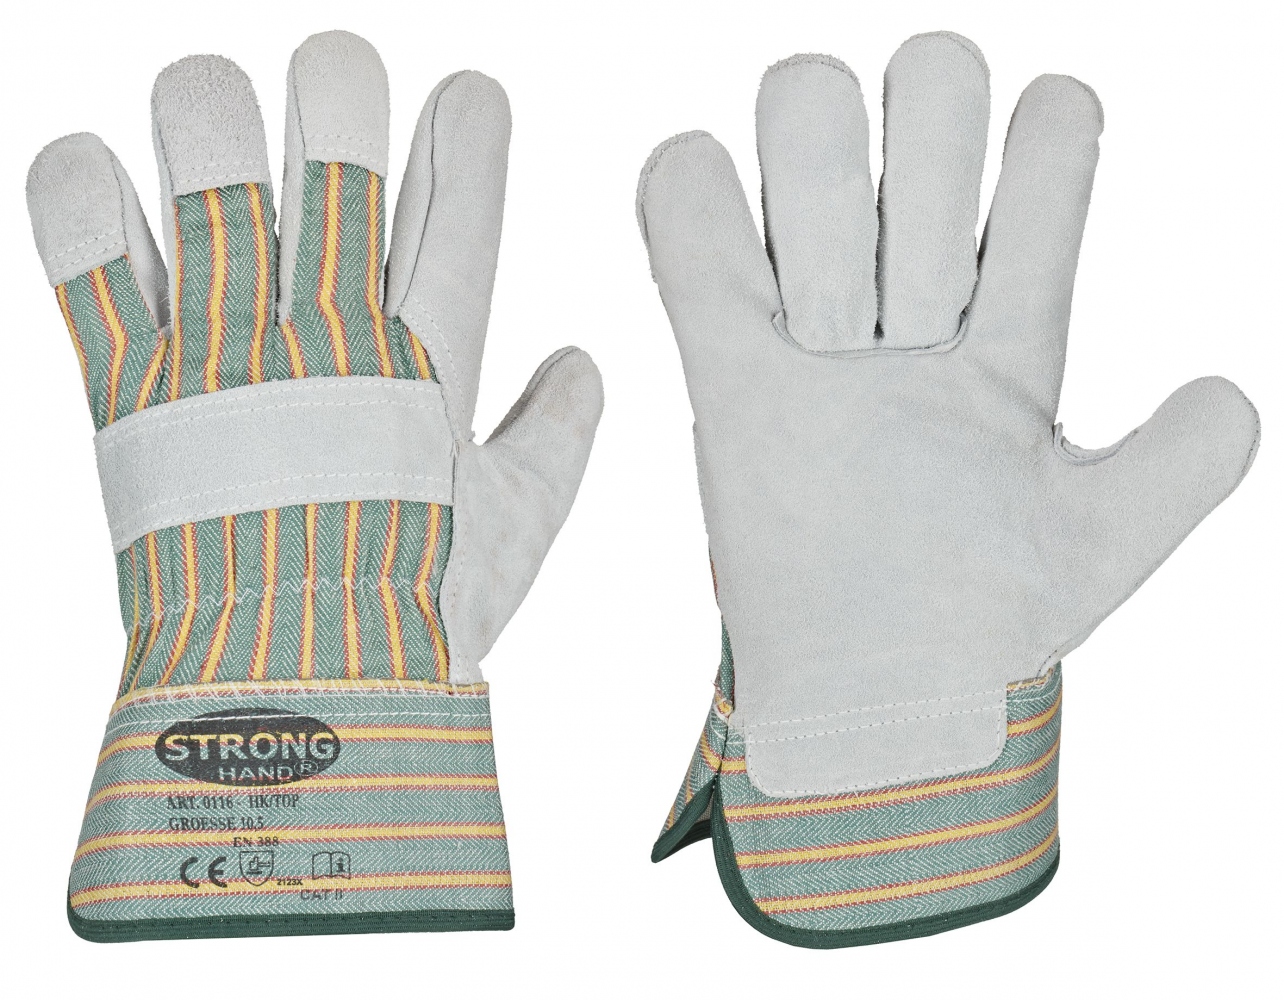 Split leather safety gloves